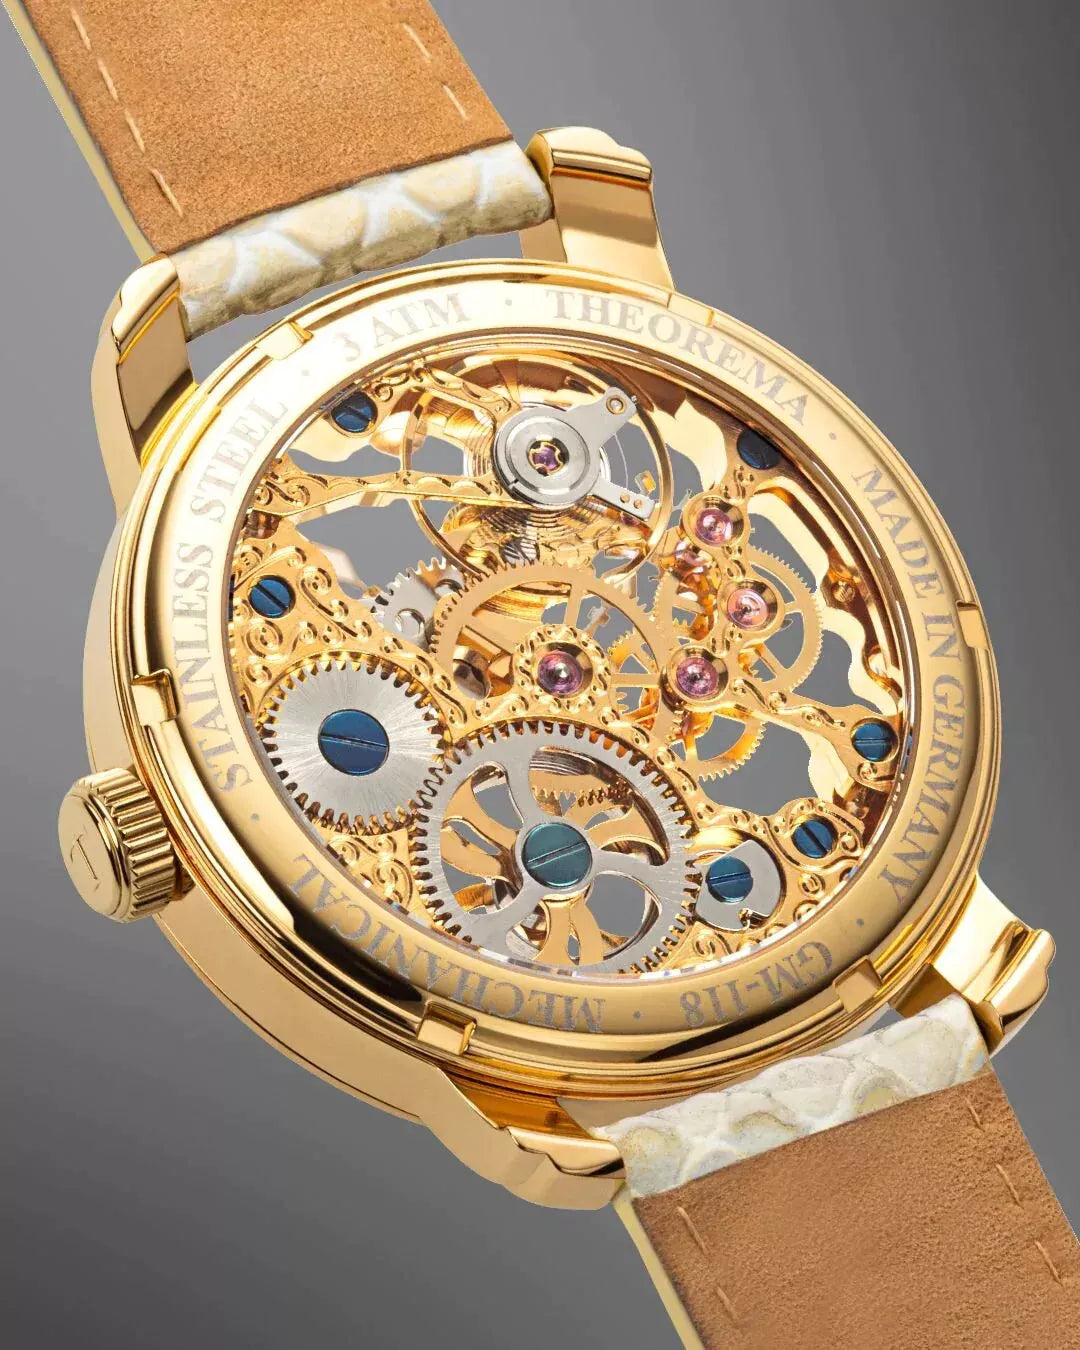 Swiss Luxury Mechanical Watches from IWC Schaffhausen